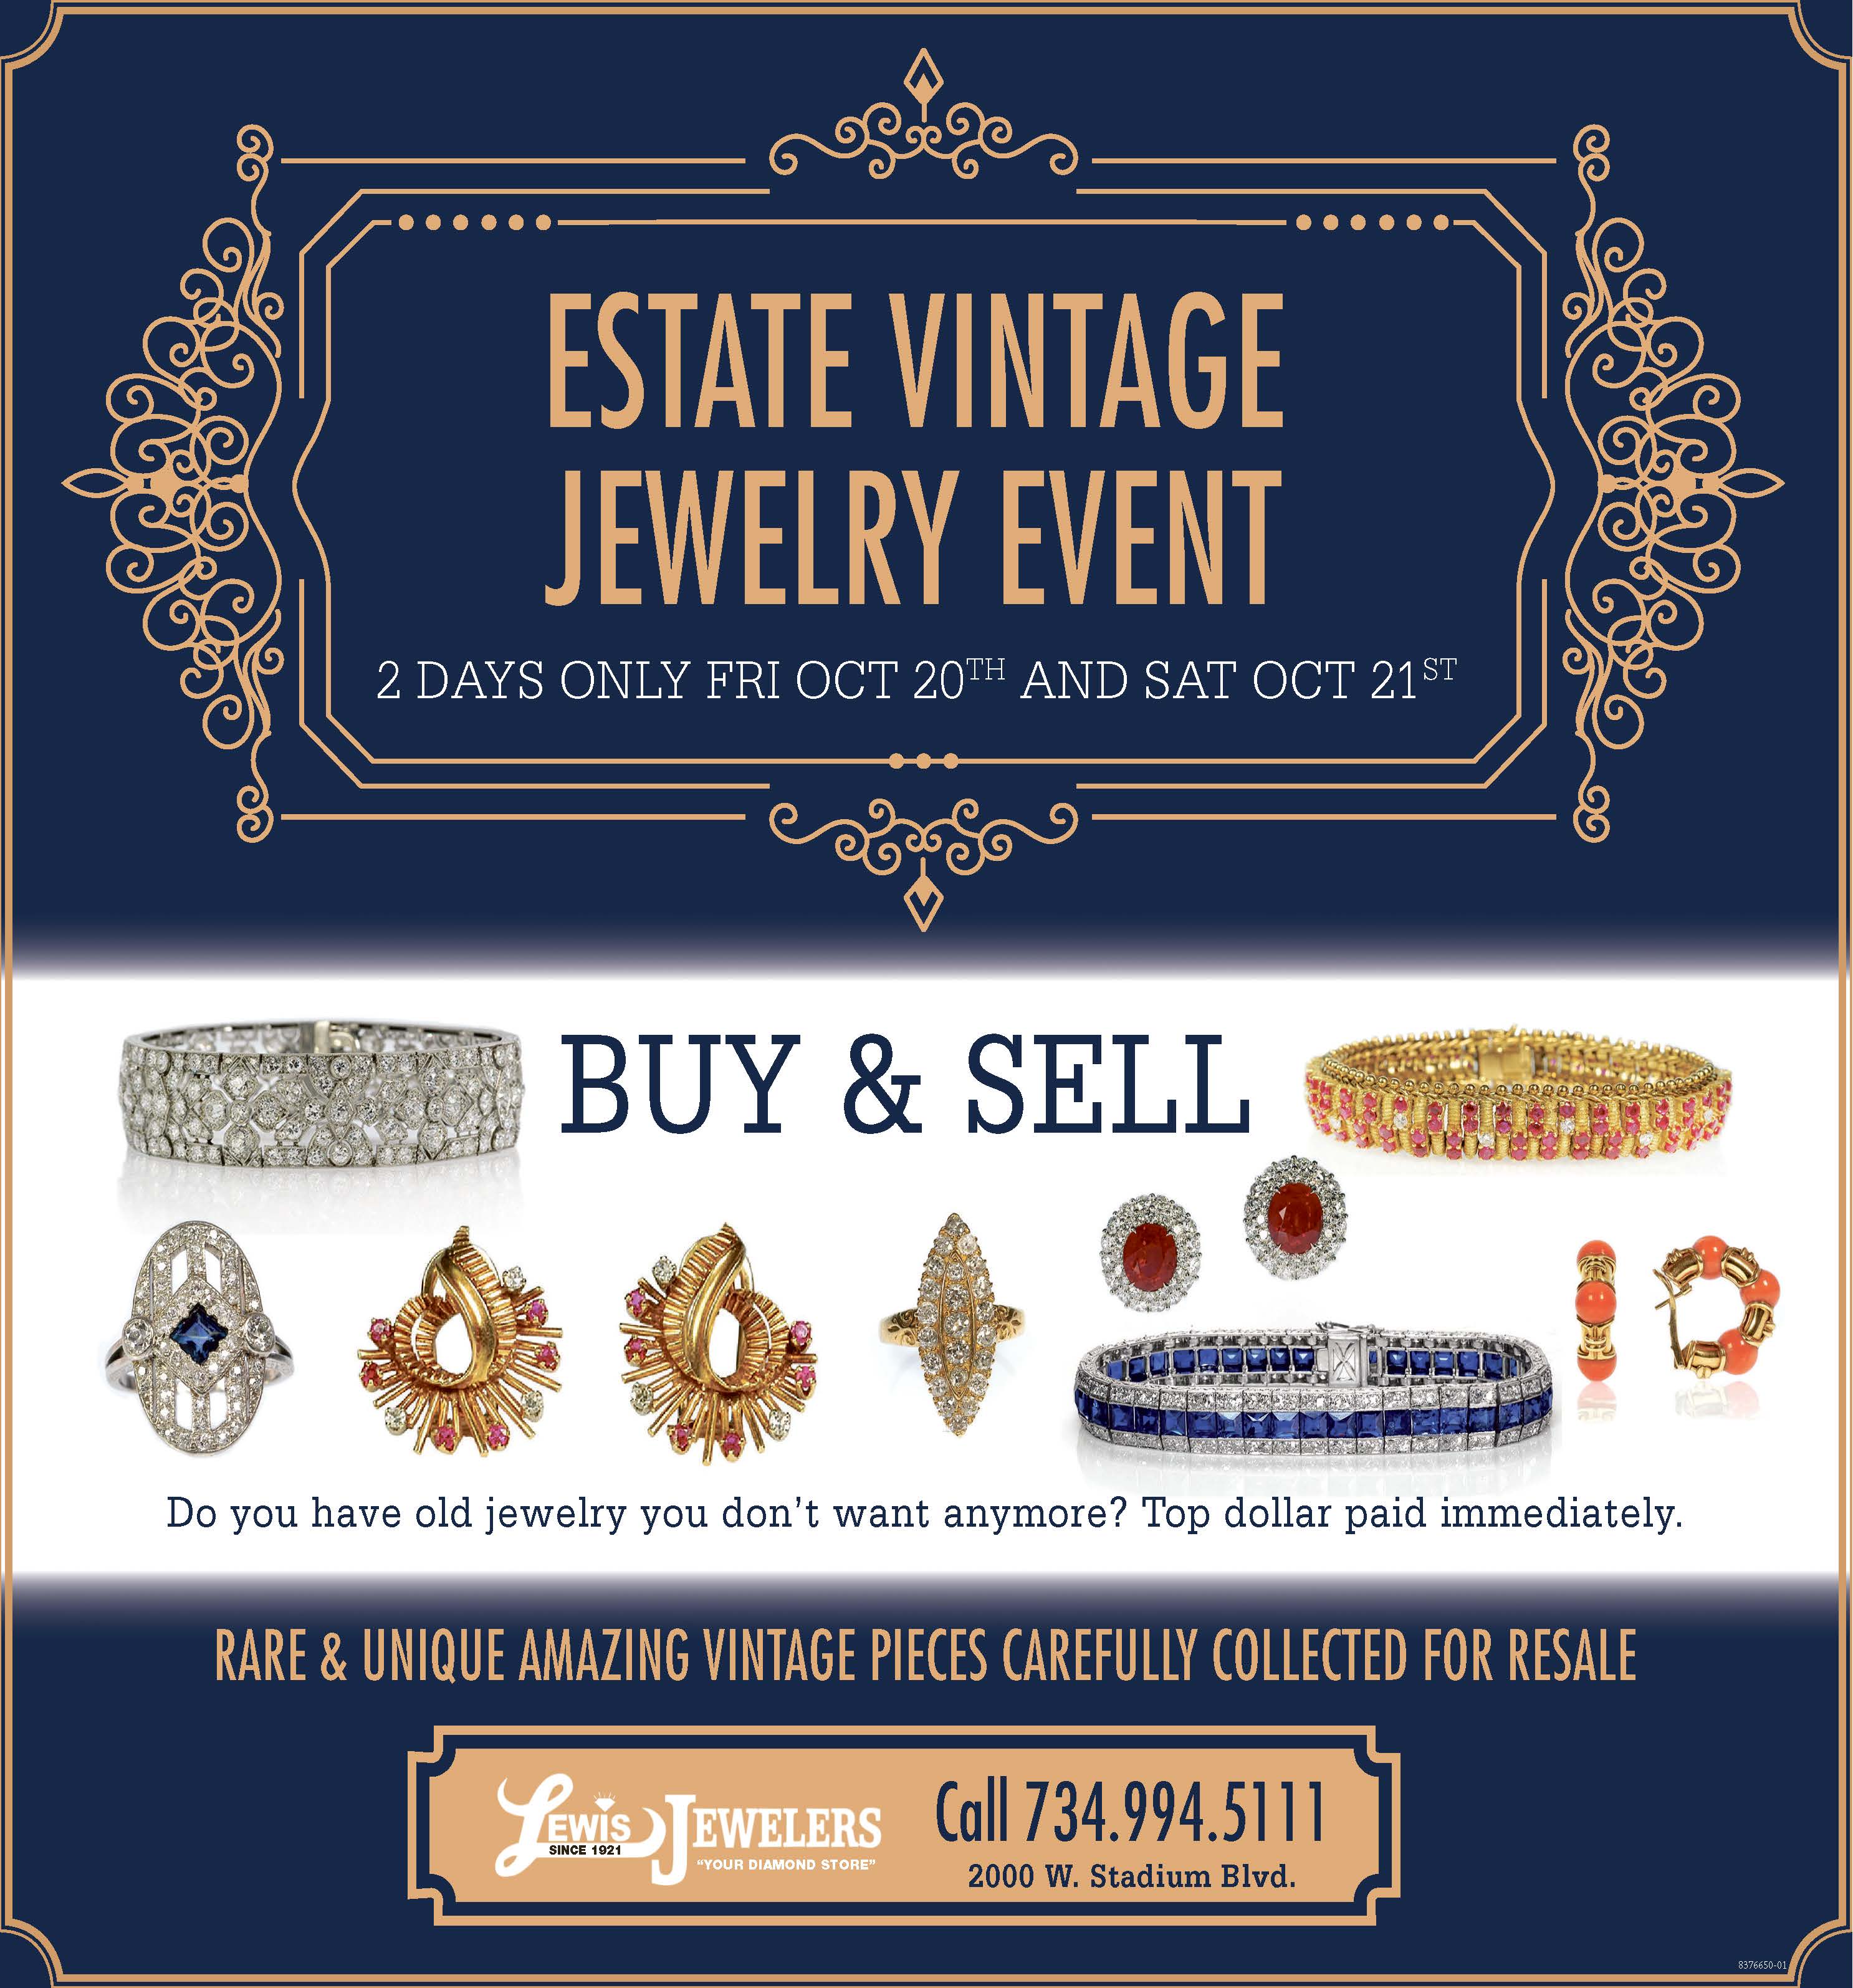 Ann Arbor Fine Jewelry Retailer Lewis Jewelers Announces Vintage